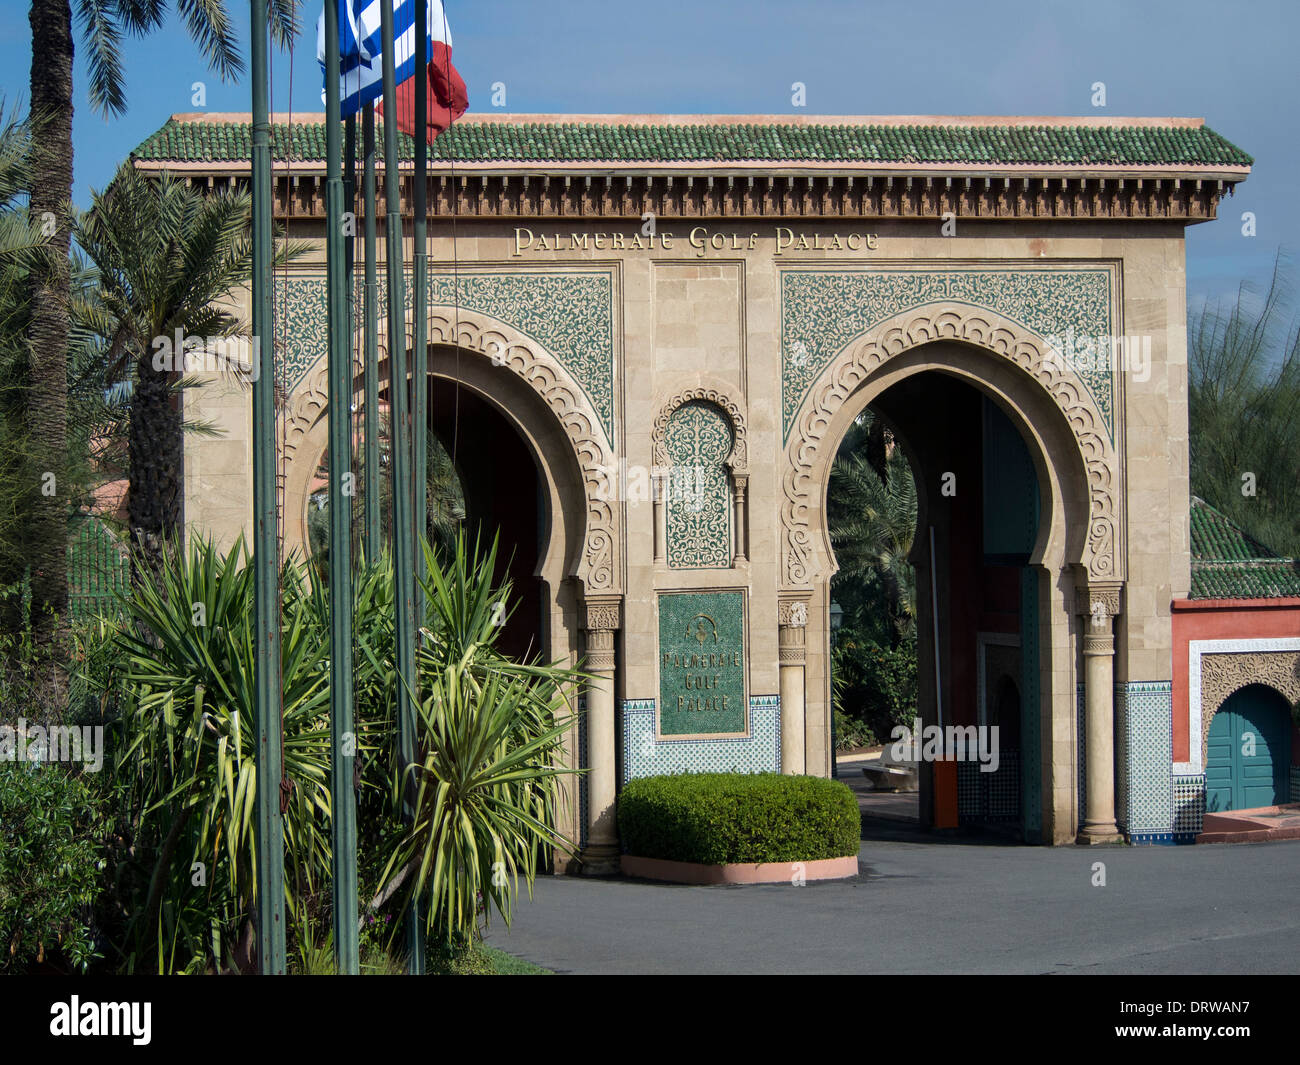 Entrance to the Palmeraei Golf Palace Golf Course Club, Marrakech Stock Photo